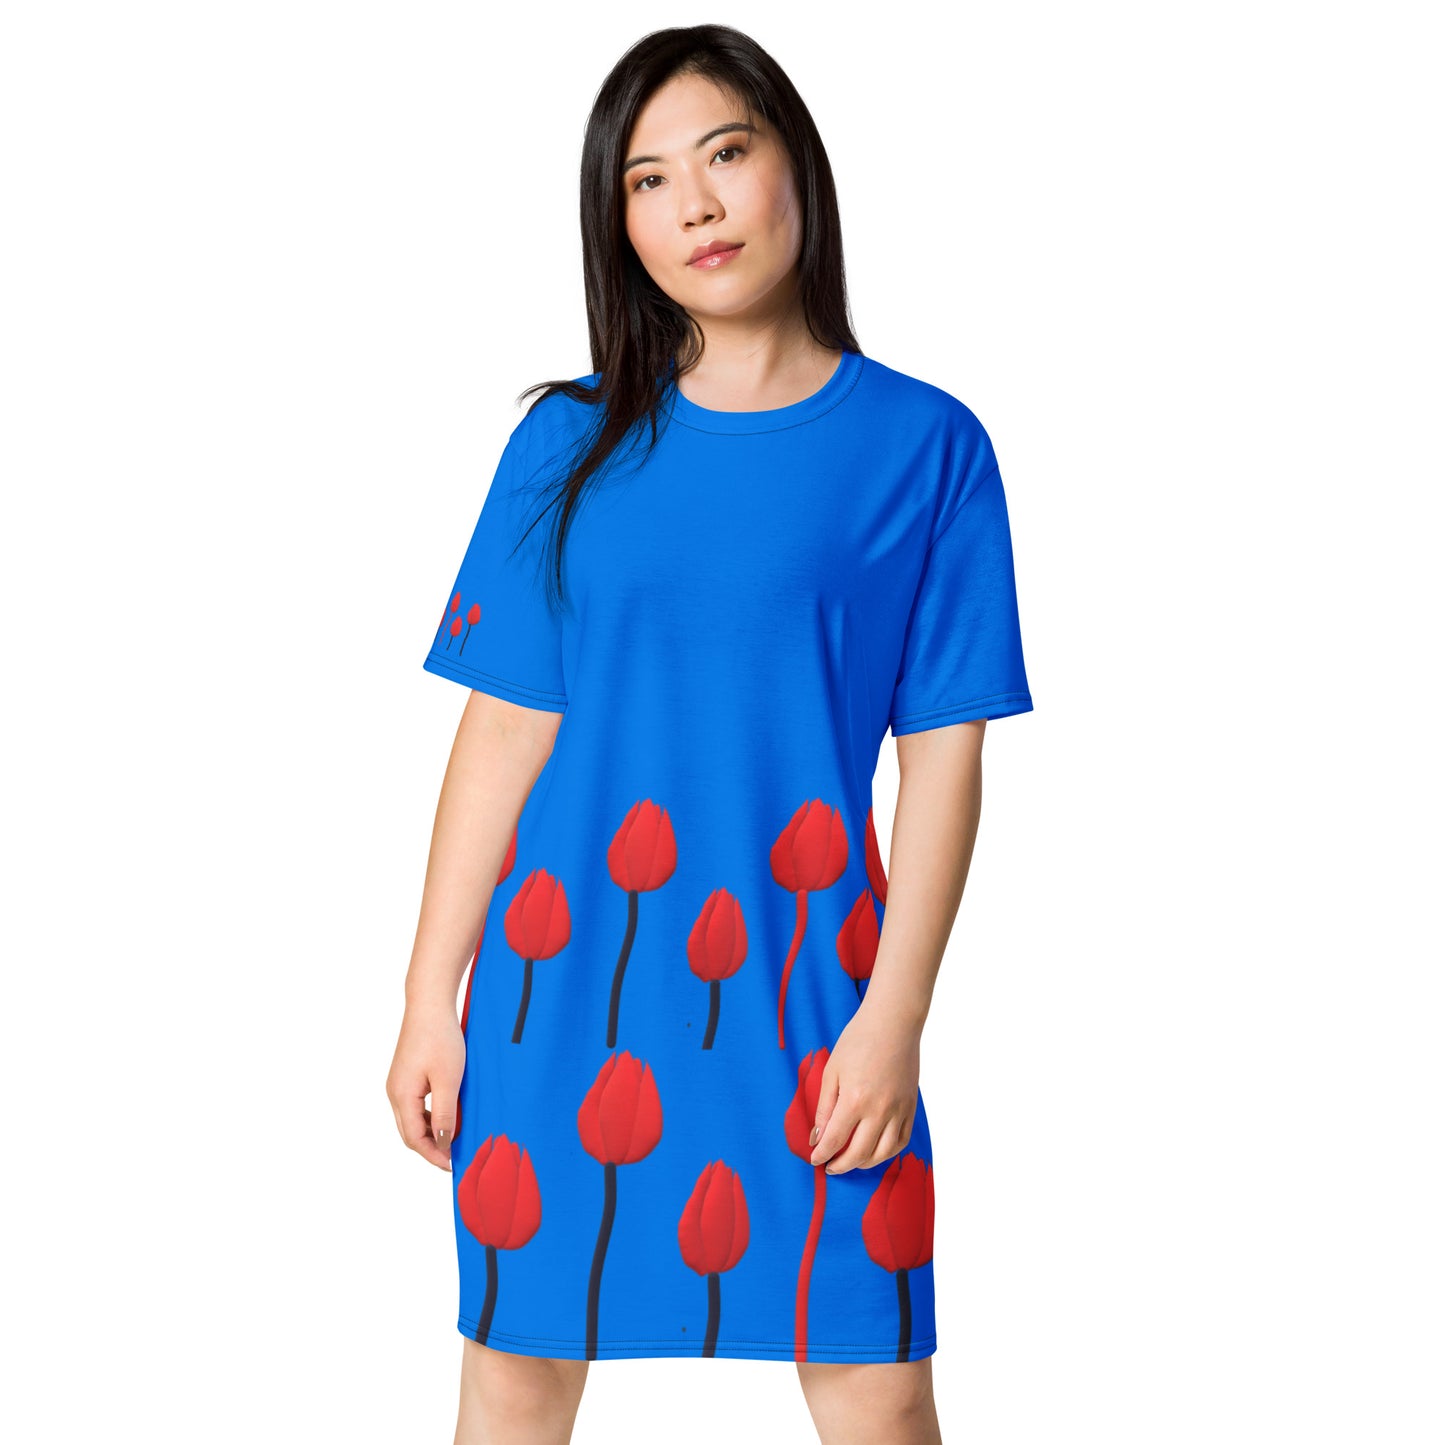 T-shirt dress Tulip on blue